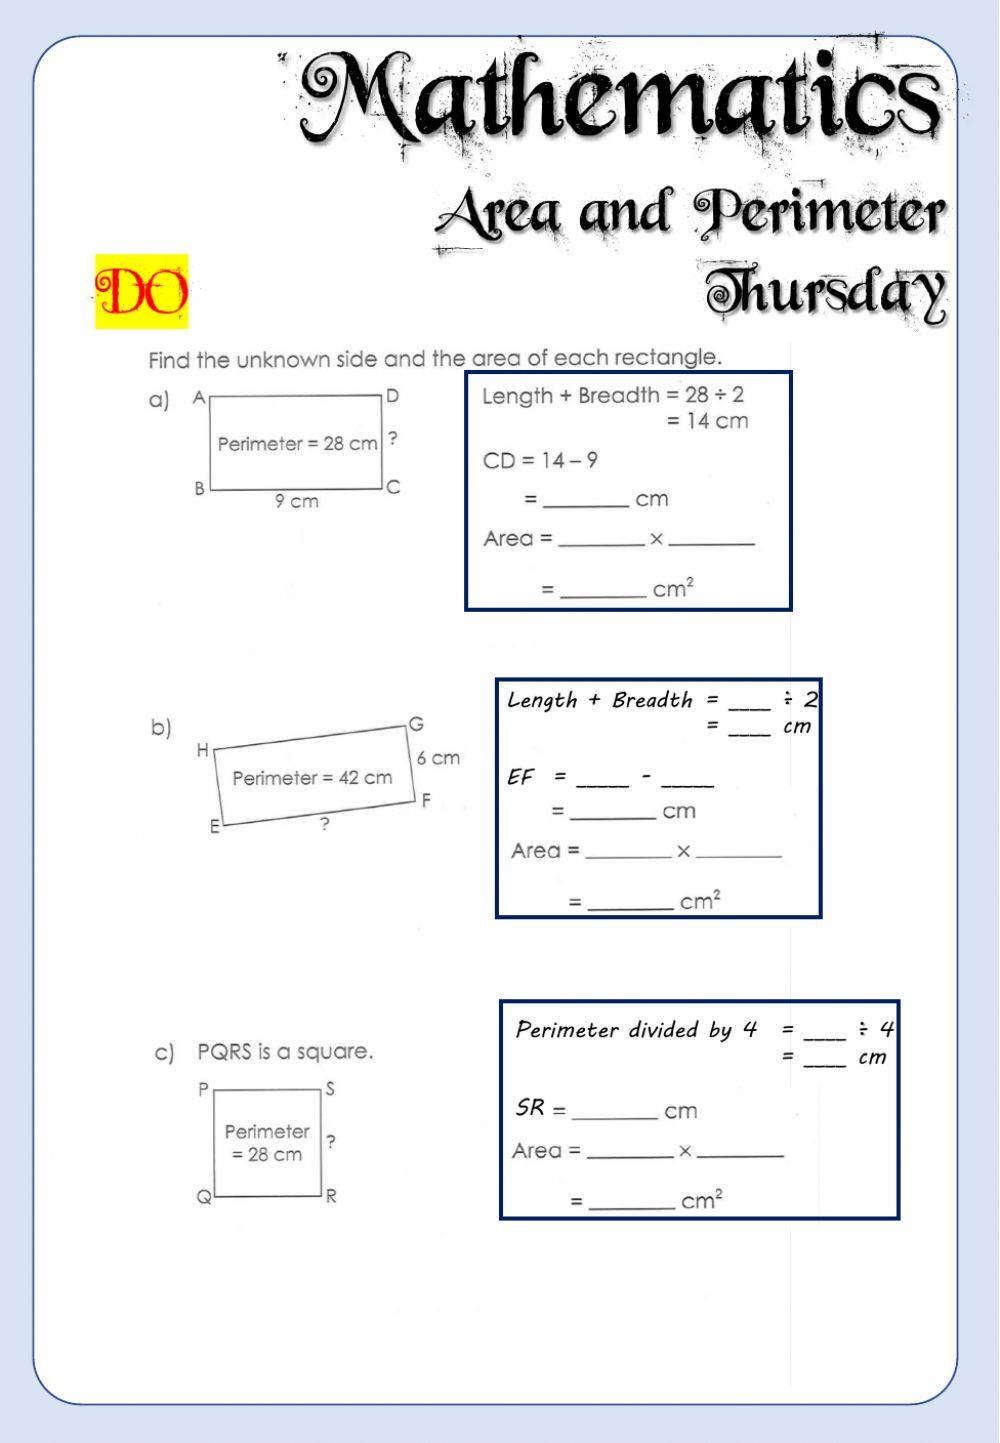 Week 21 - Math - Thursday 6